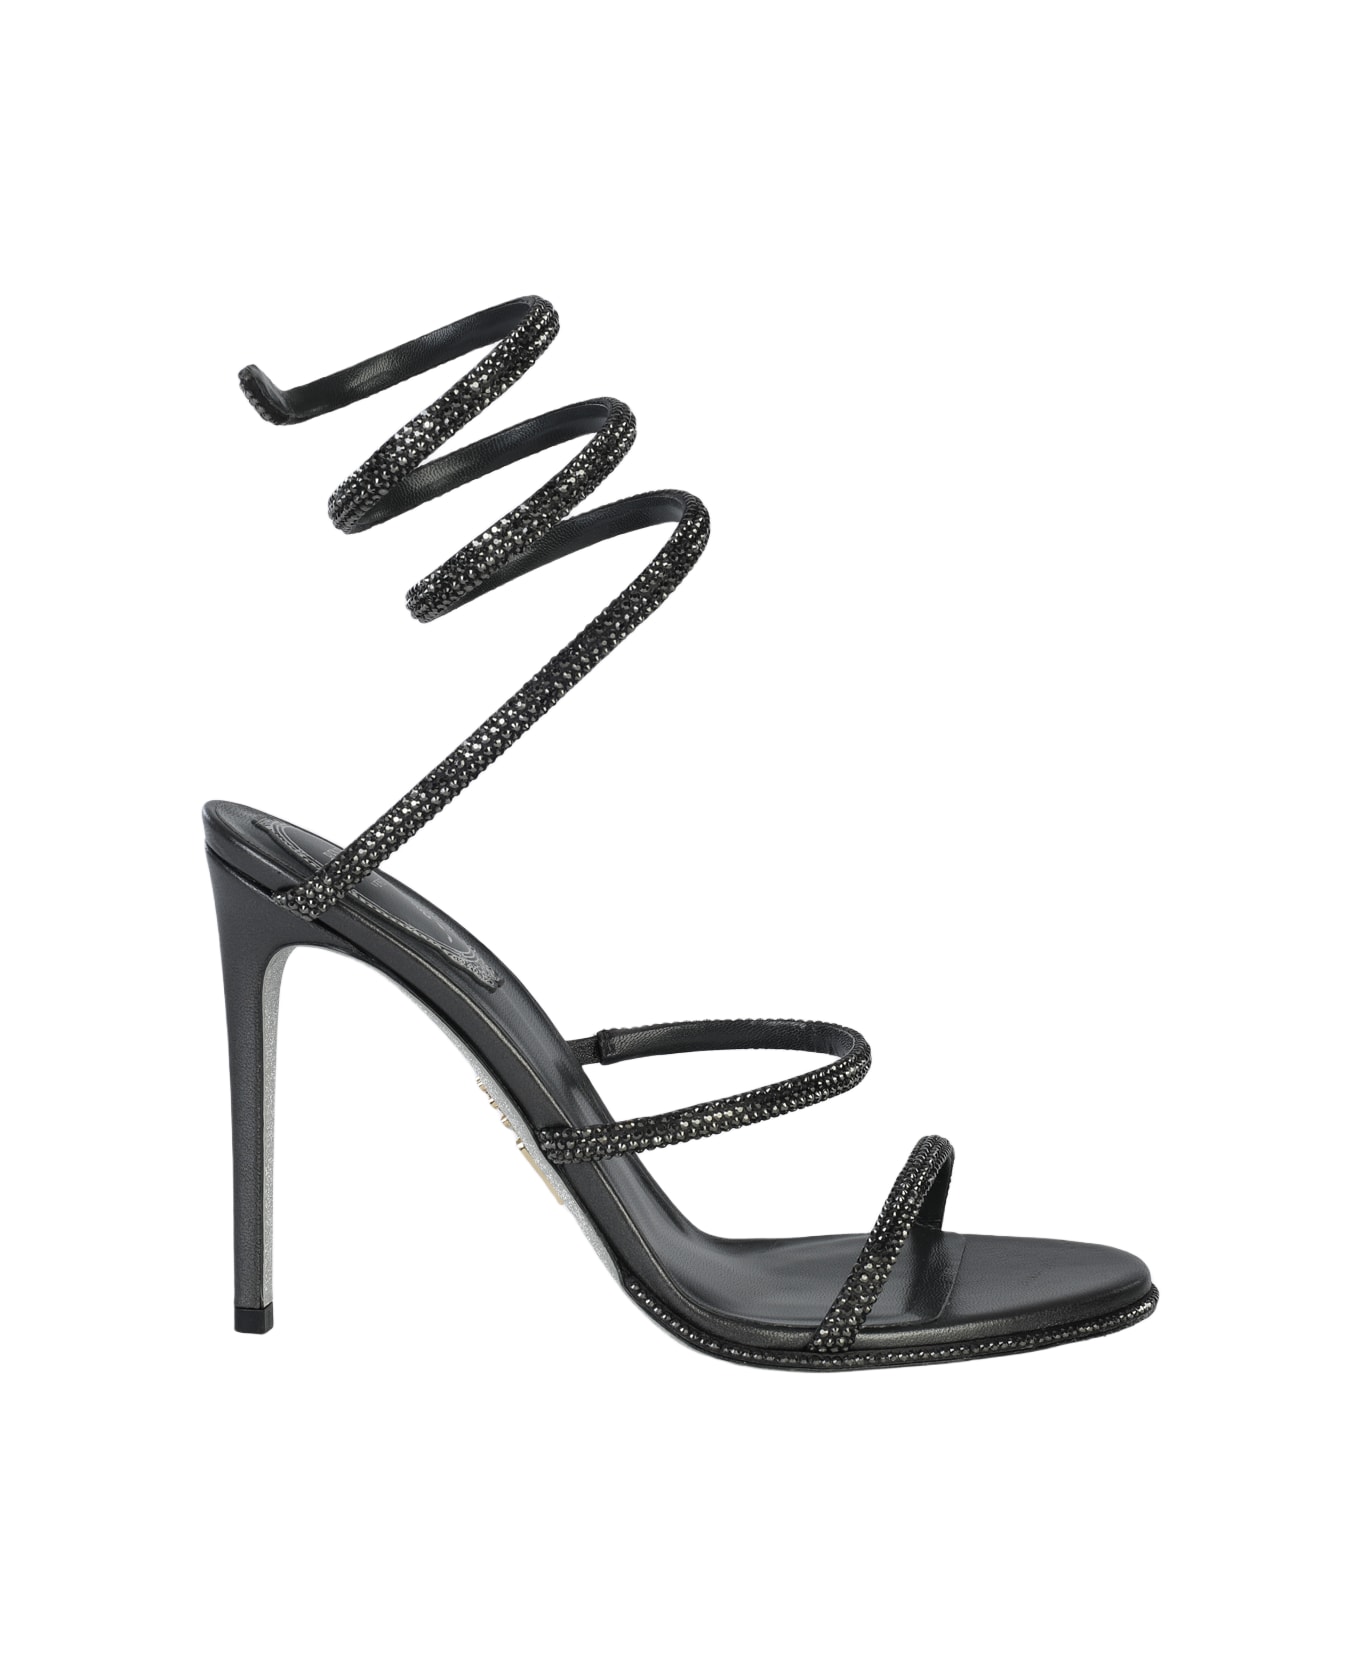 René Caovilla Black Leather Sandals - GREY SATIN/JET HEMATITE STRASS